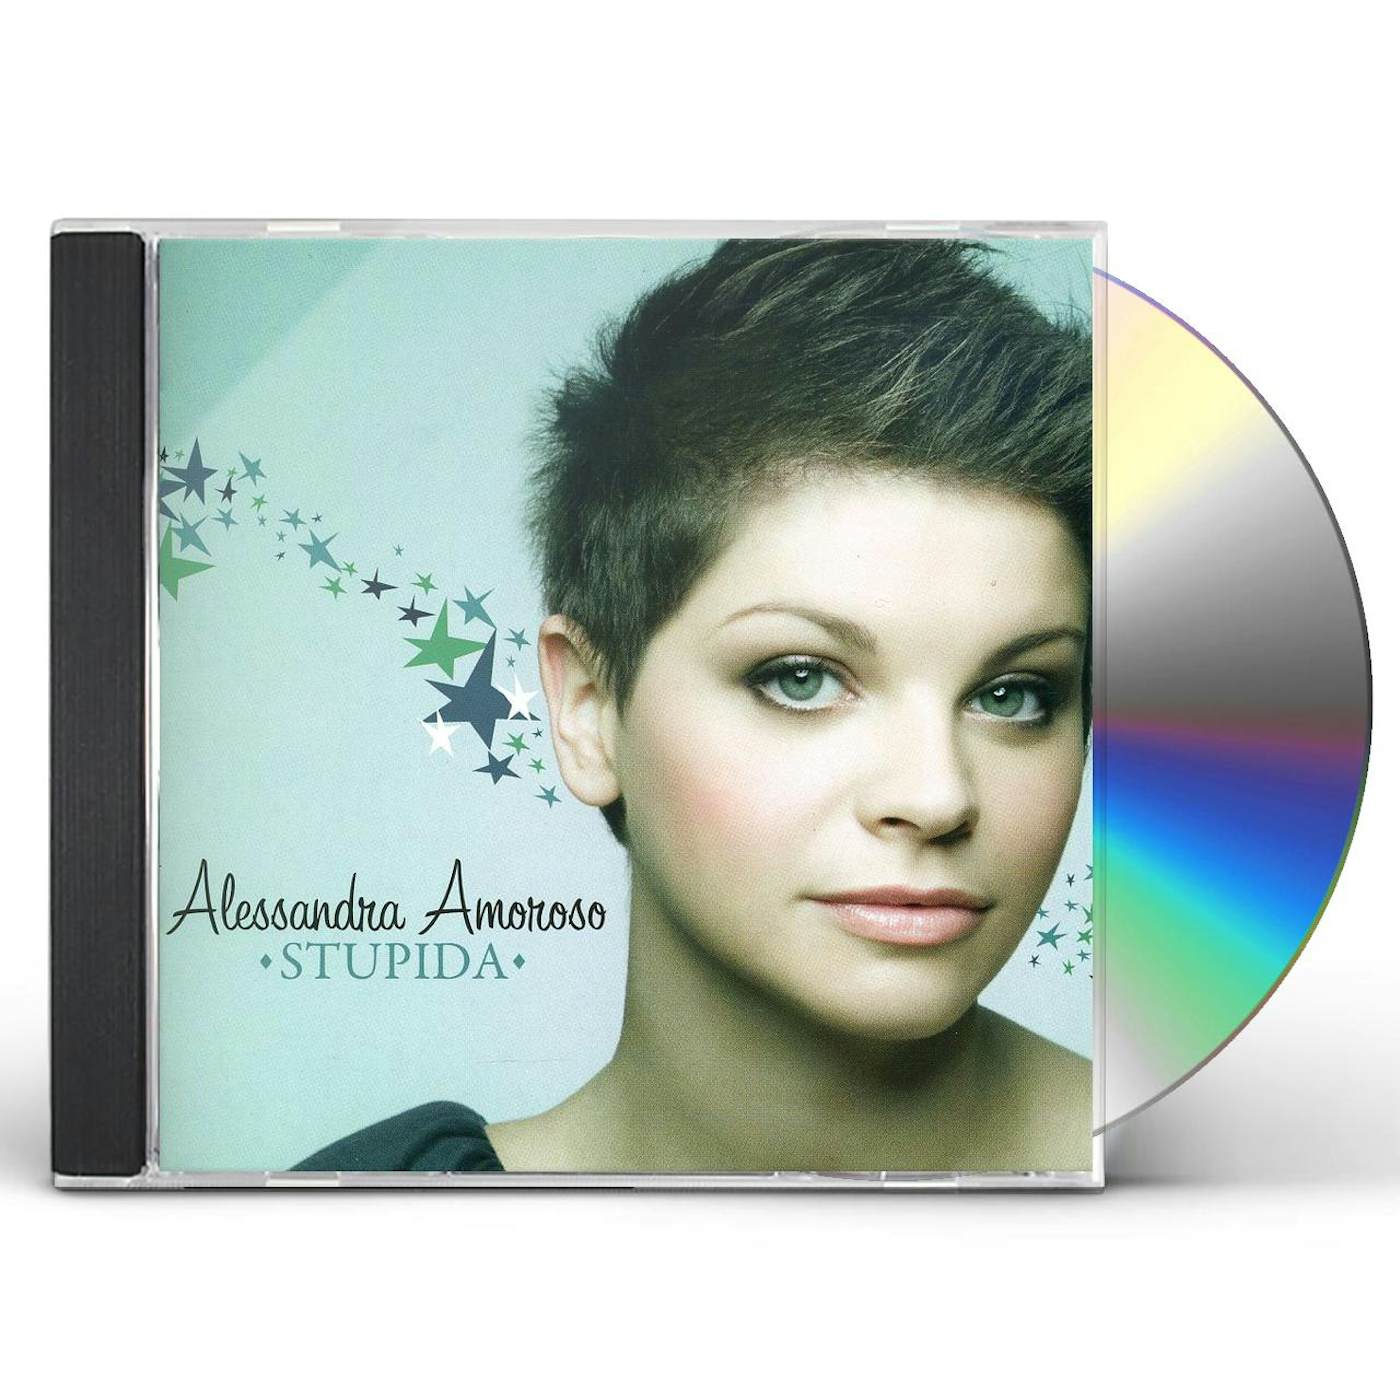 Alessandra Amoroso STUPIDA CD